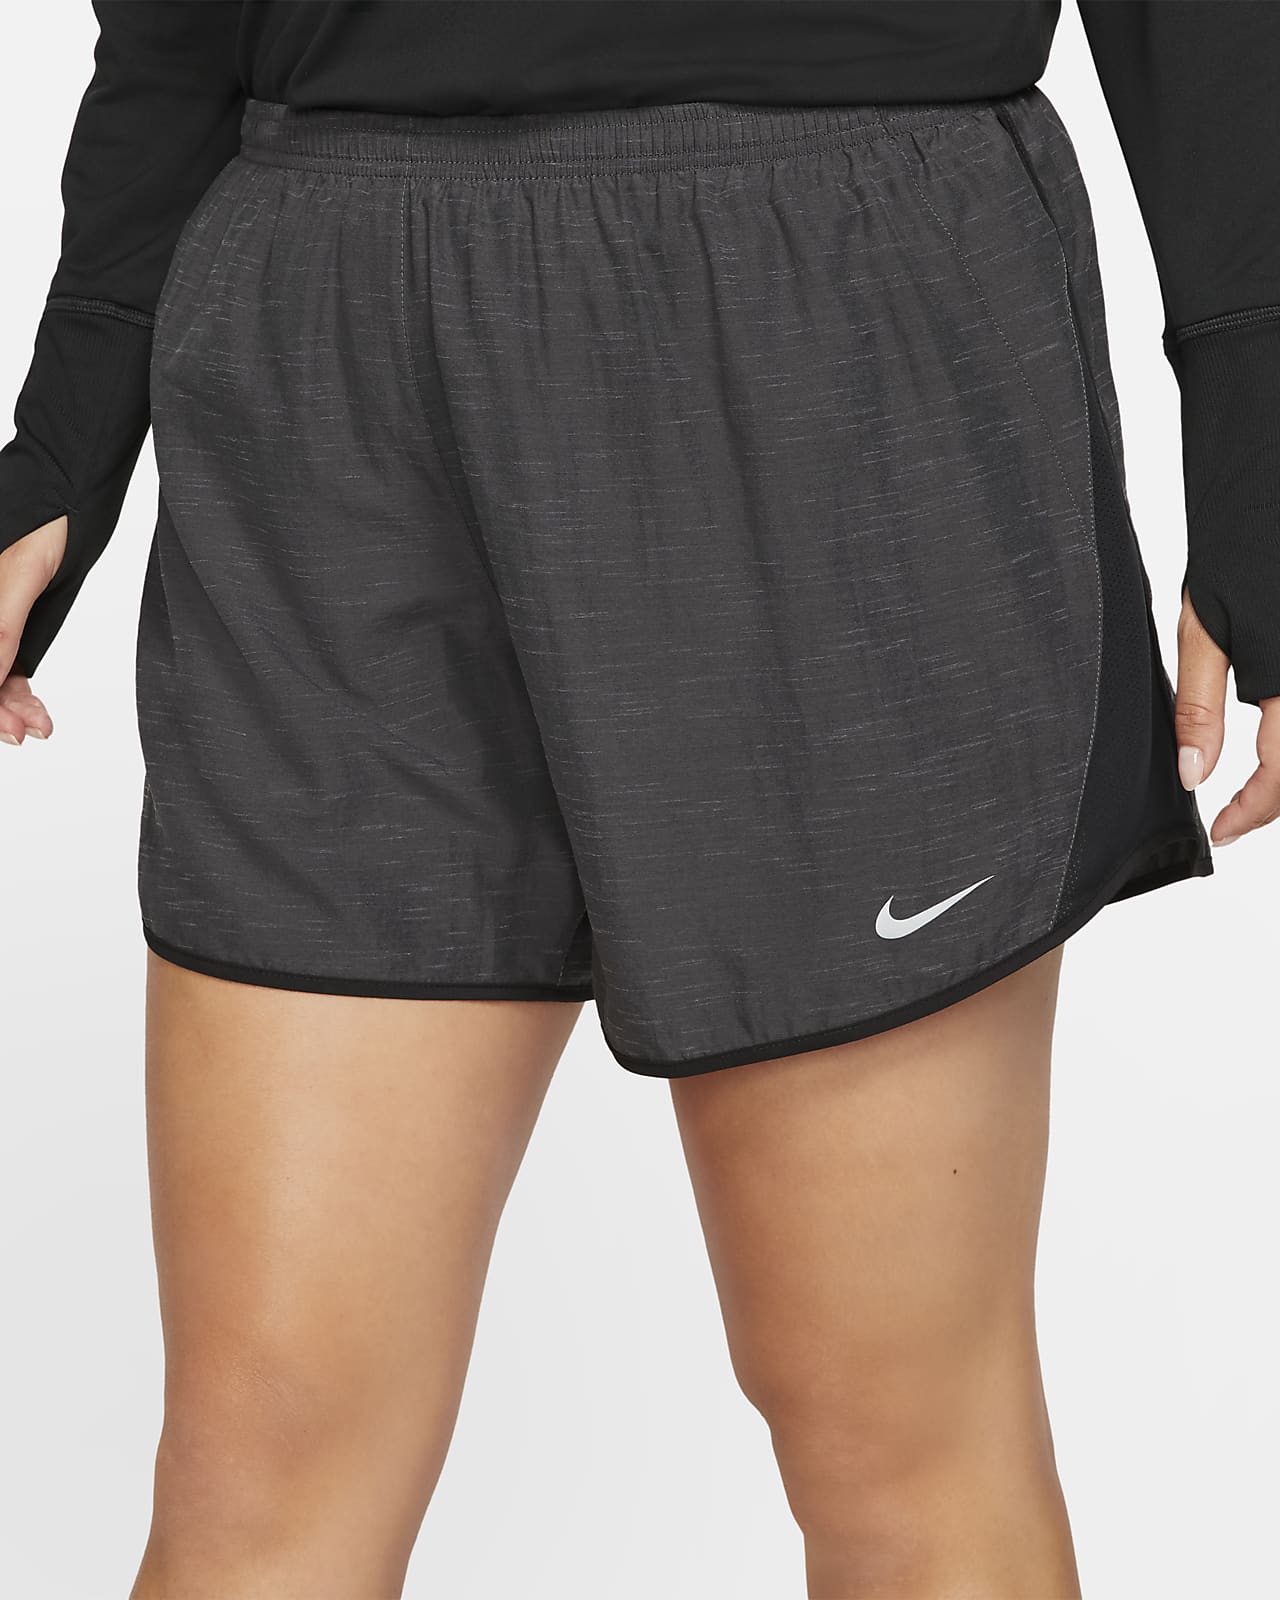 Nike Women's Running Shorts (Plus Size 